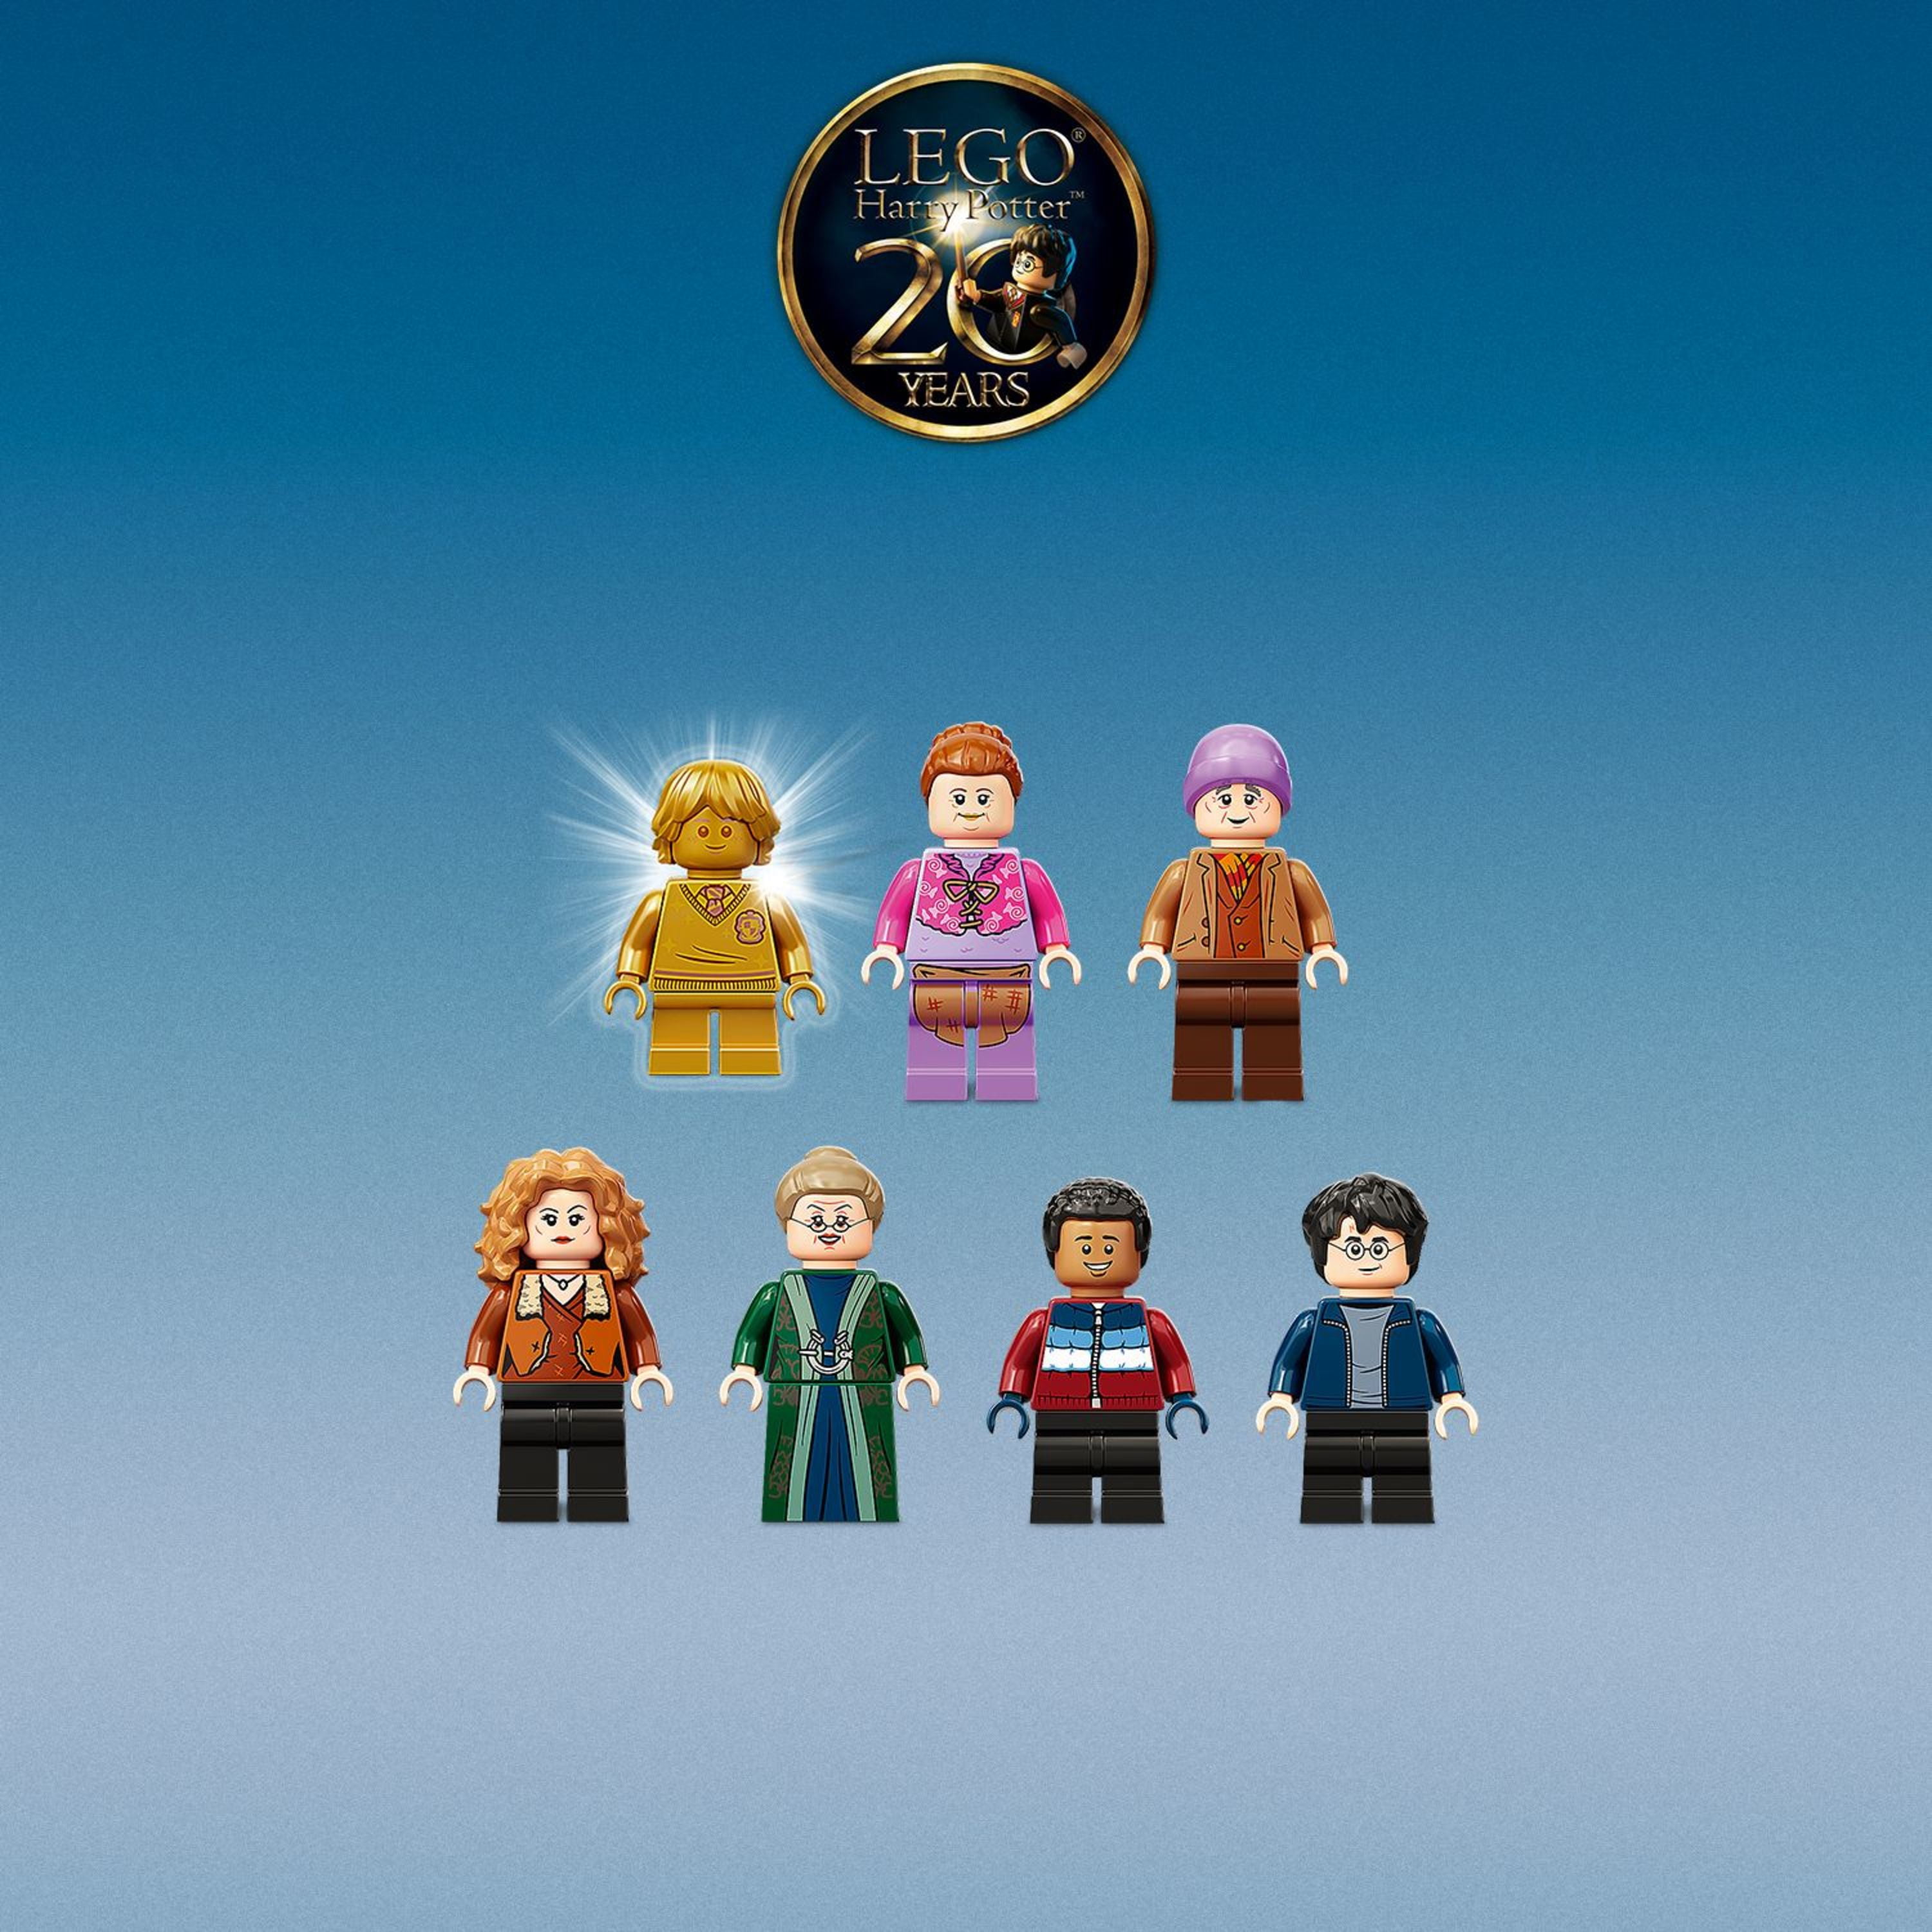 Giant LEGO Hogwarts & Hogsmeade Village with 300 Minifigures! Custom Harry  Potter 